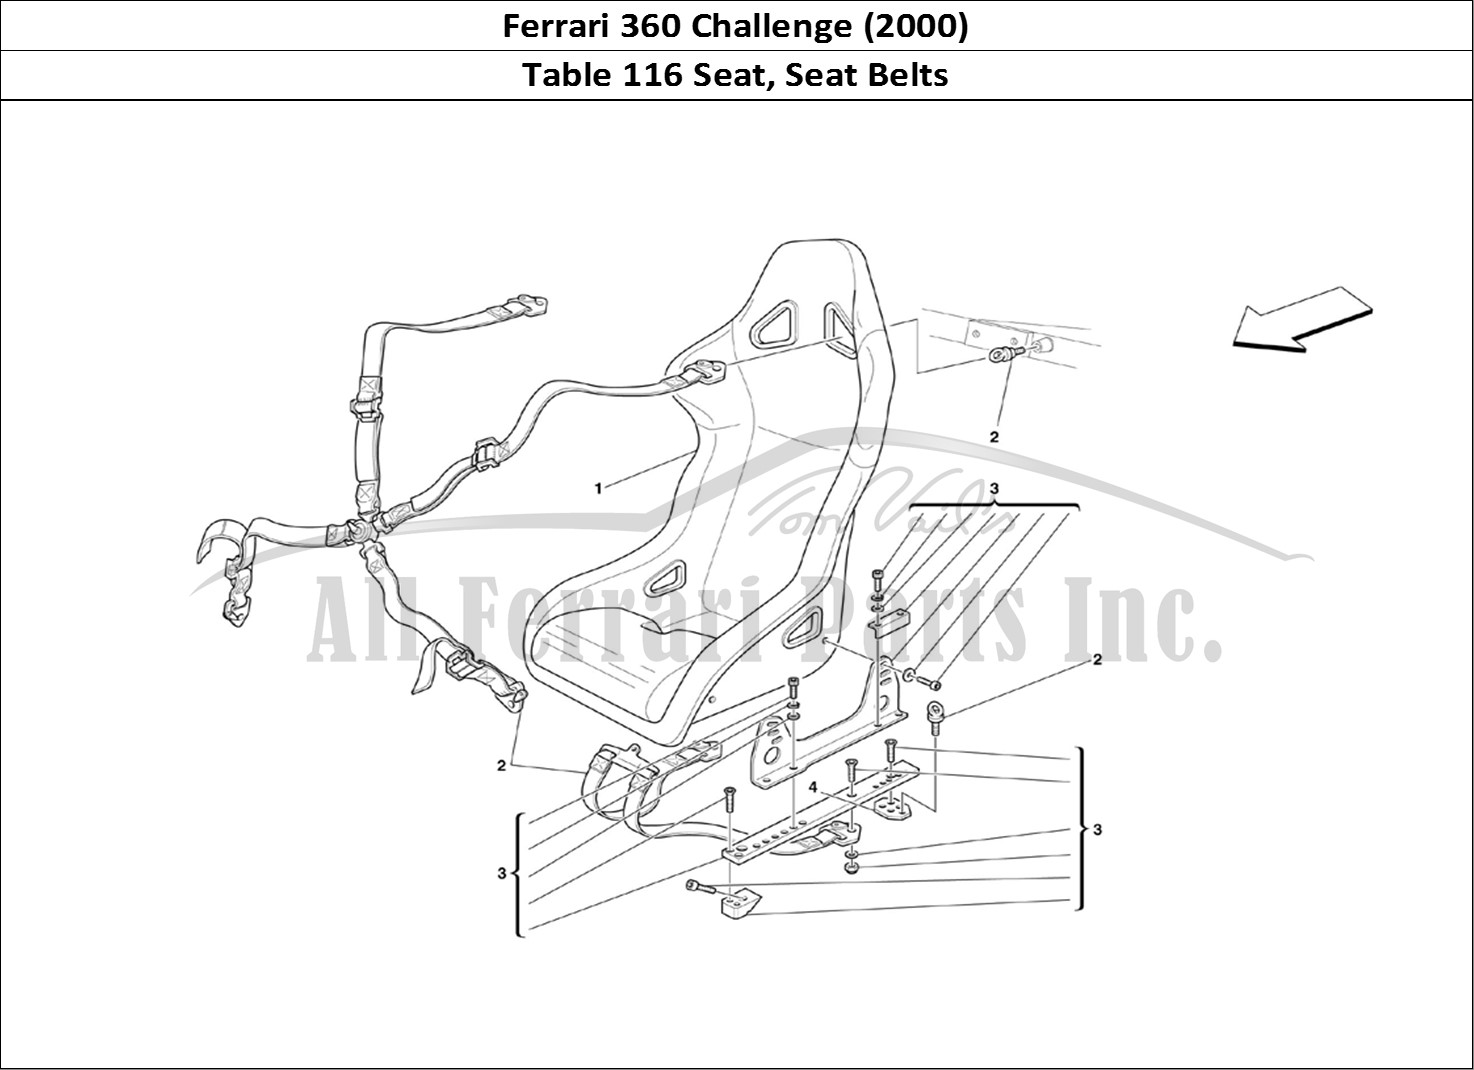 Ferrari Parts Ferrari 360 Challenge (2000) Page 116 Seat and Safety Belts